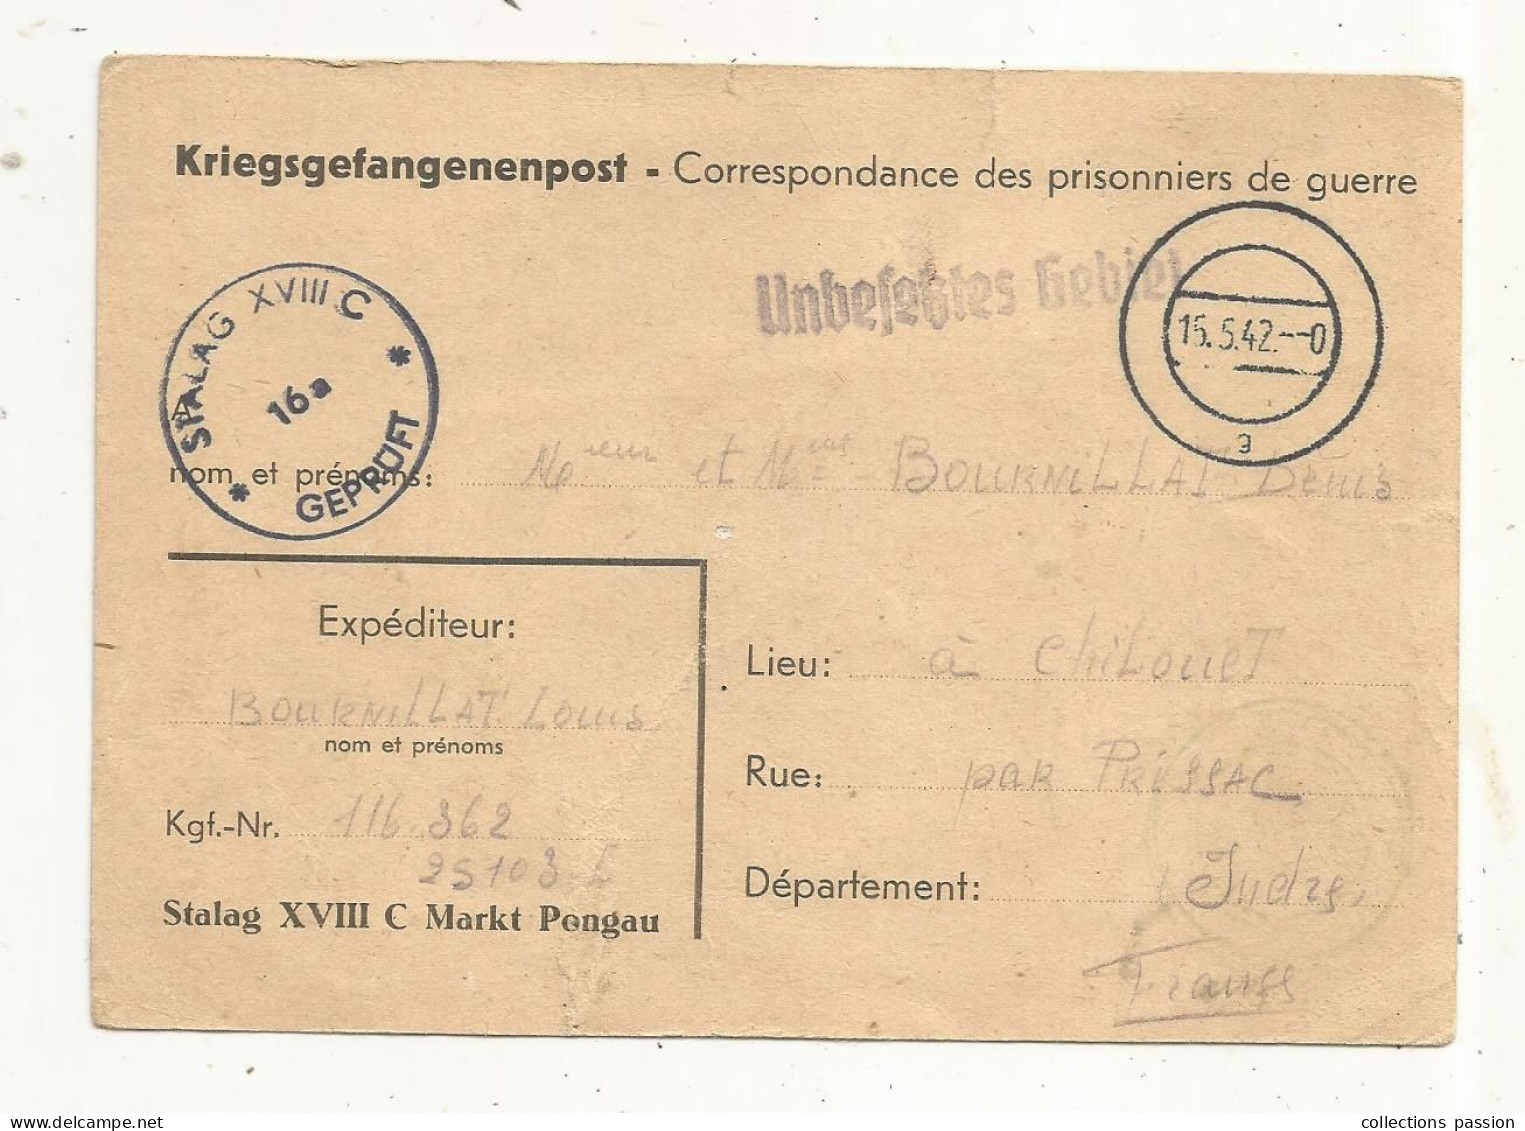 CORRESPONDANCE DES PRISONNIERS DE GUERRE, Kriegsgefangenenpost, Stalag XVIII C Markt Pongau, 1942 - Kriegsgefangenenpost